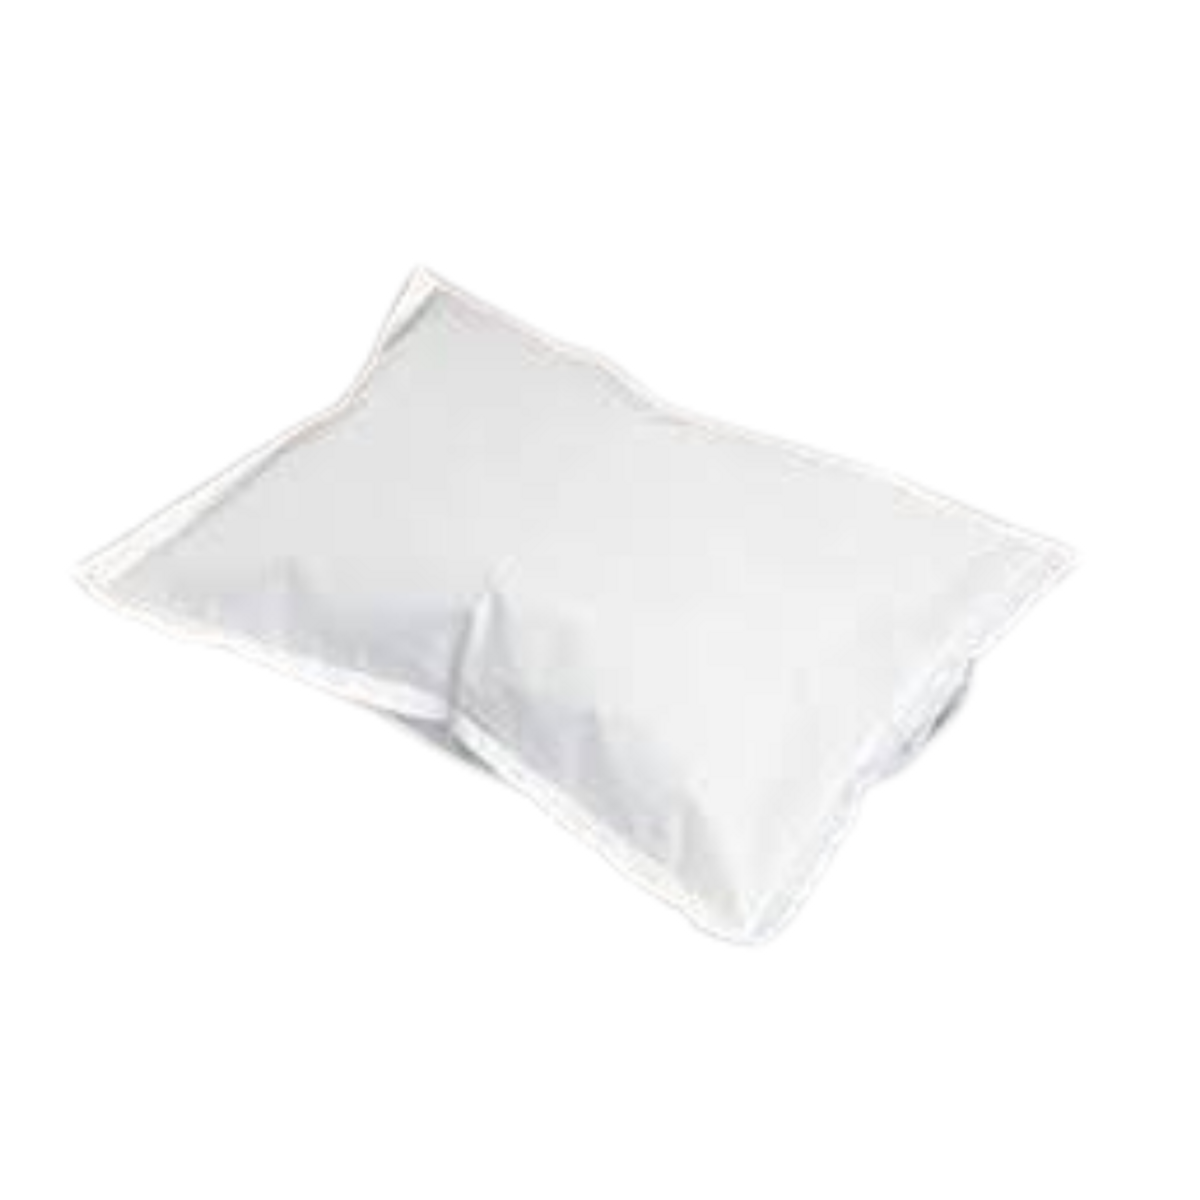 Graham Flexair Disposable Hospital Pillows